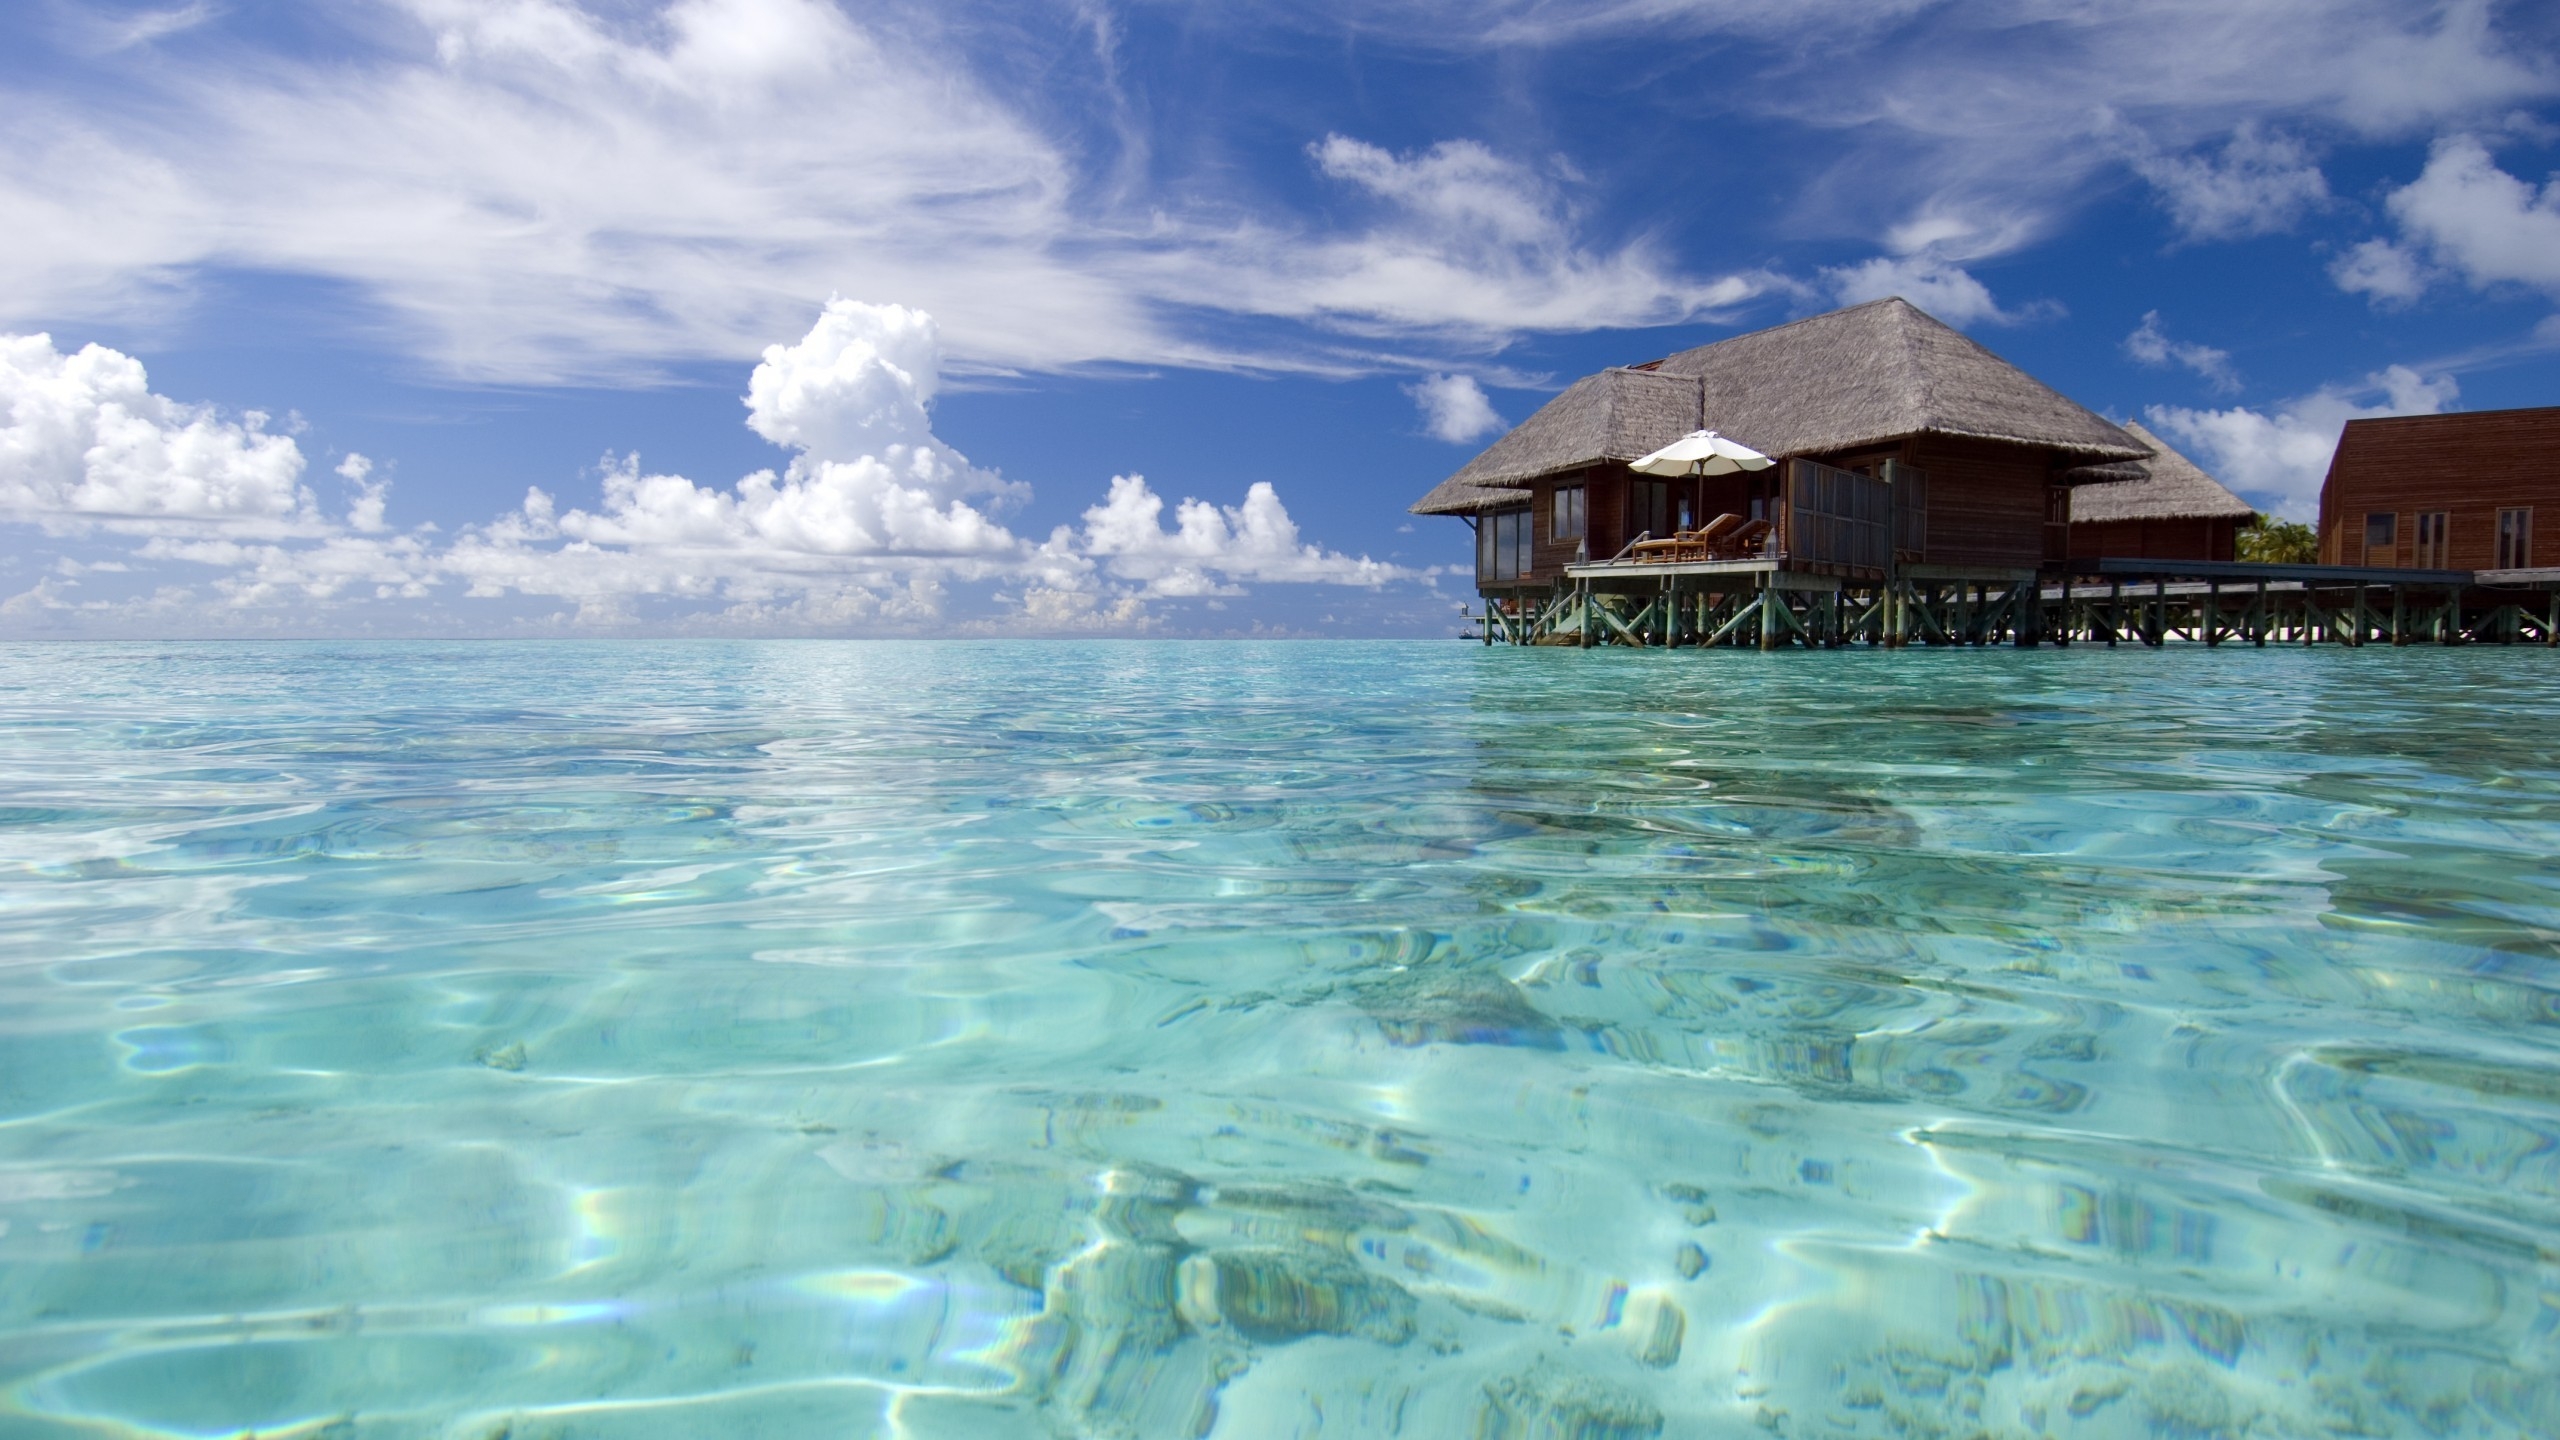 Luxury Maldives Resort for 2560x1440 HDTV resolution